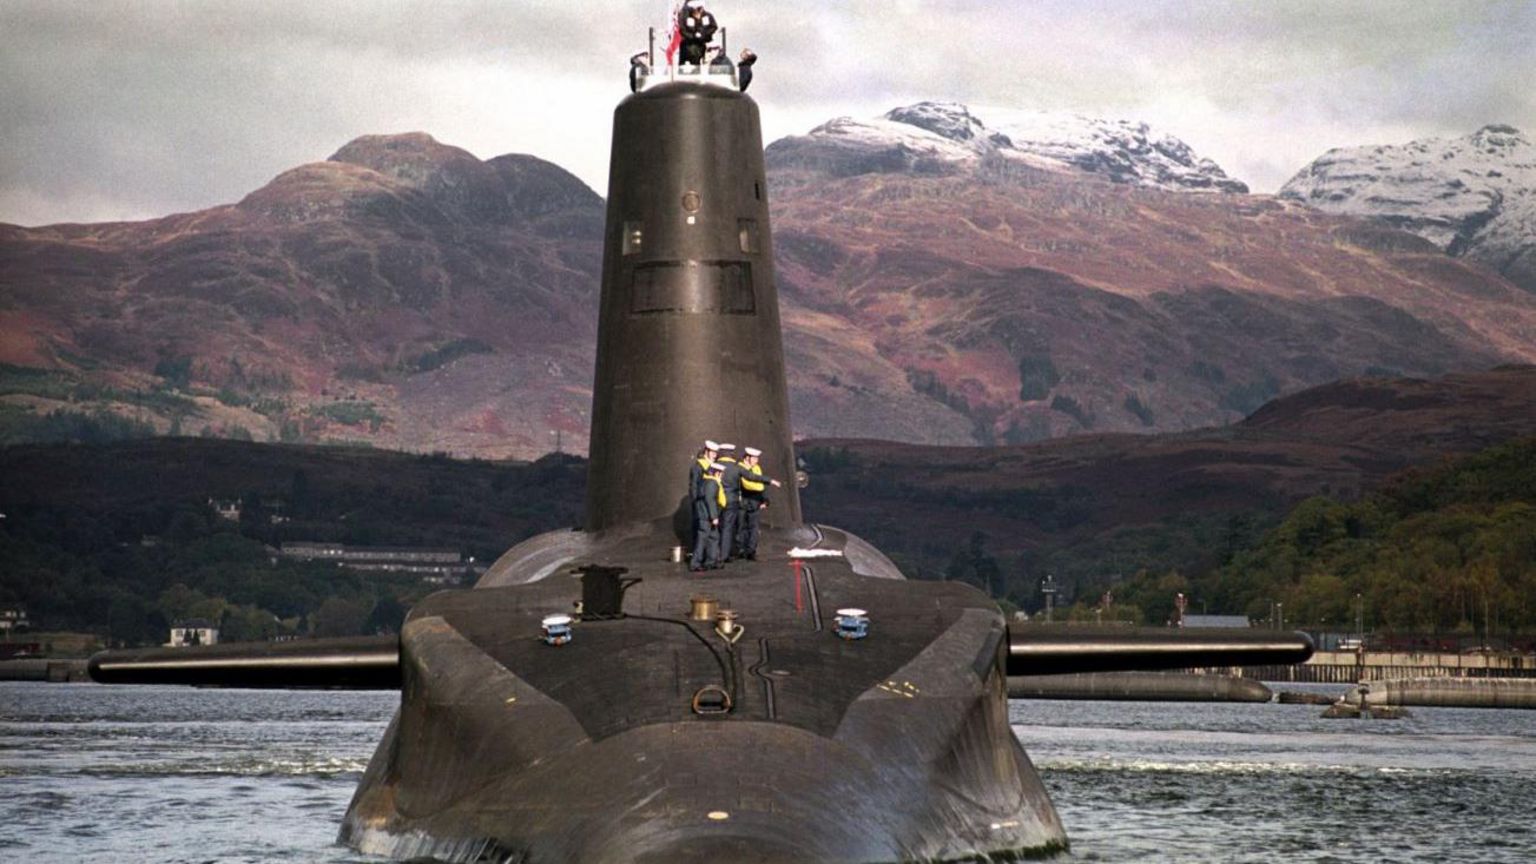 Trident armed HMS Vanguard submarine